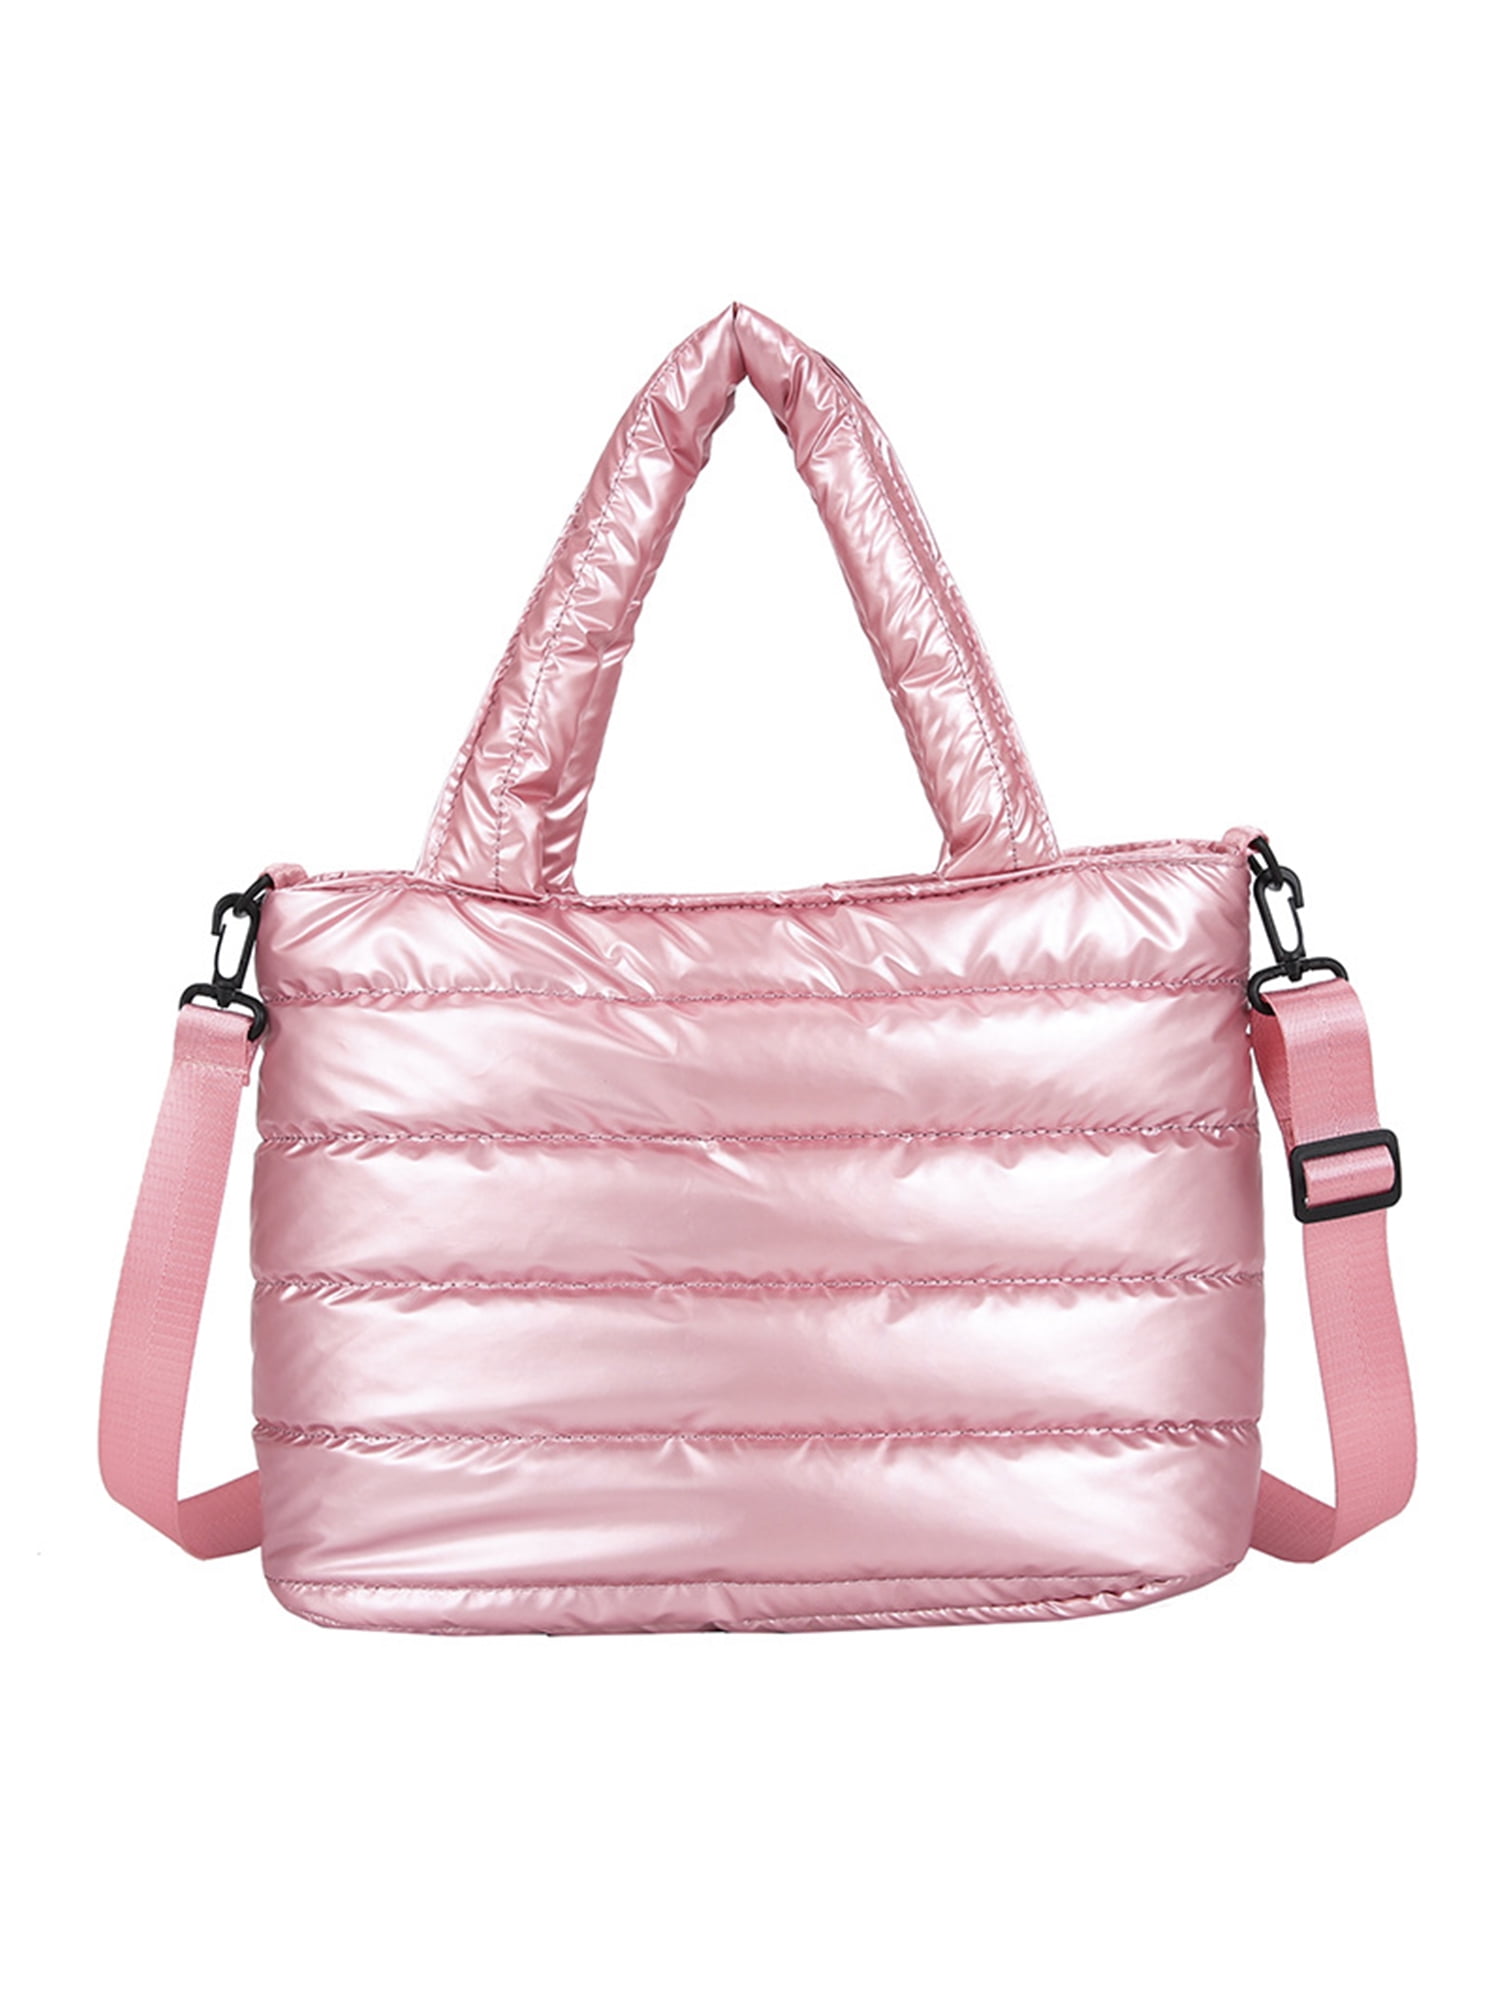 Mostdary Women Tote Top Handle Shoulder Bag Multi Pockets Fashion Handbag  Large Capacity Wallet Purse Zipper Classic Designer Portable Gray 